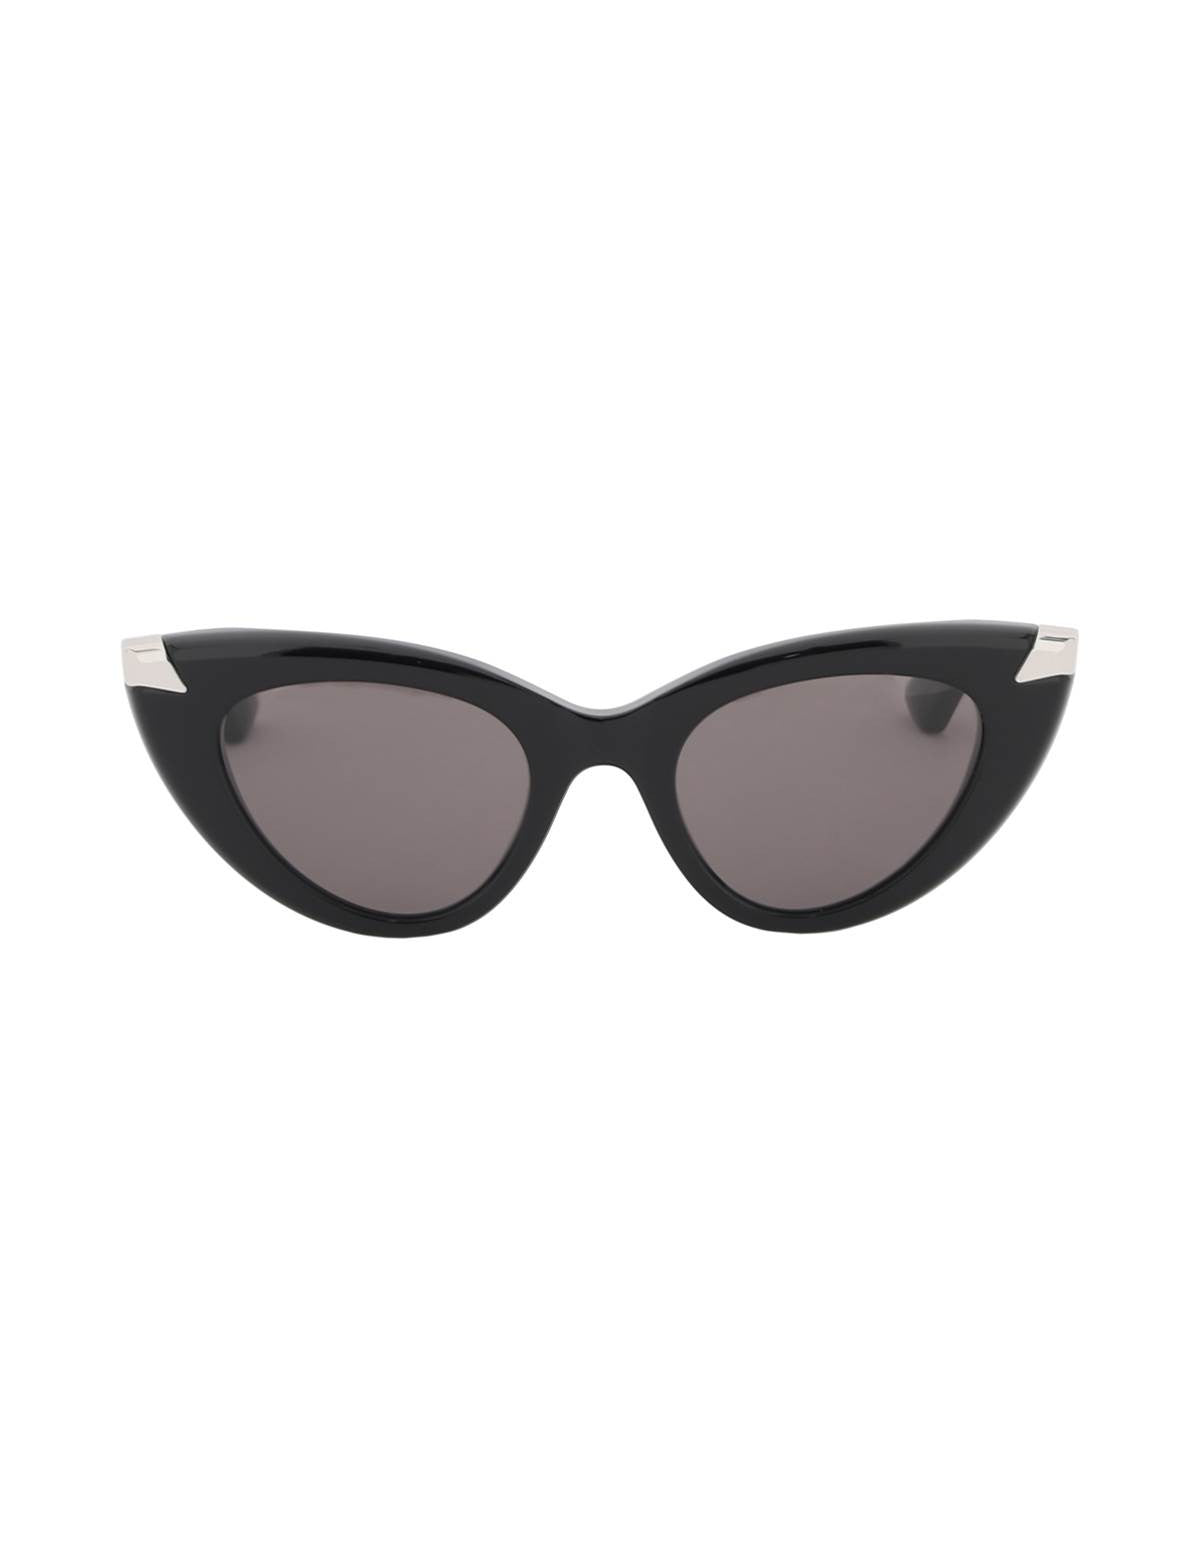 alexander-mcqueen-punk-rivet-cat-eye-sunglasses-for.jpg